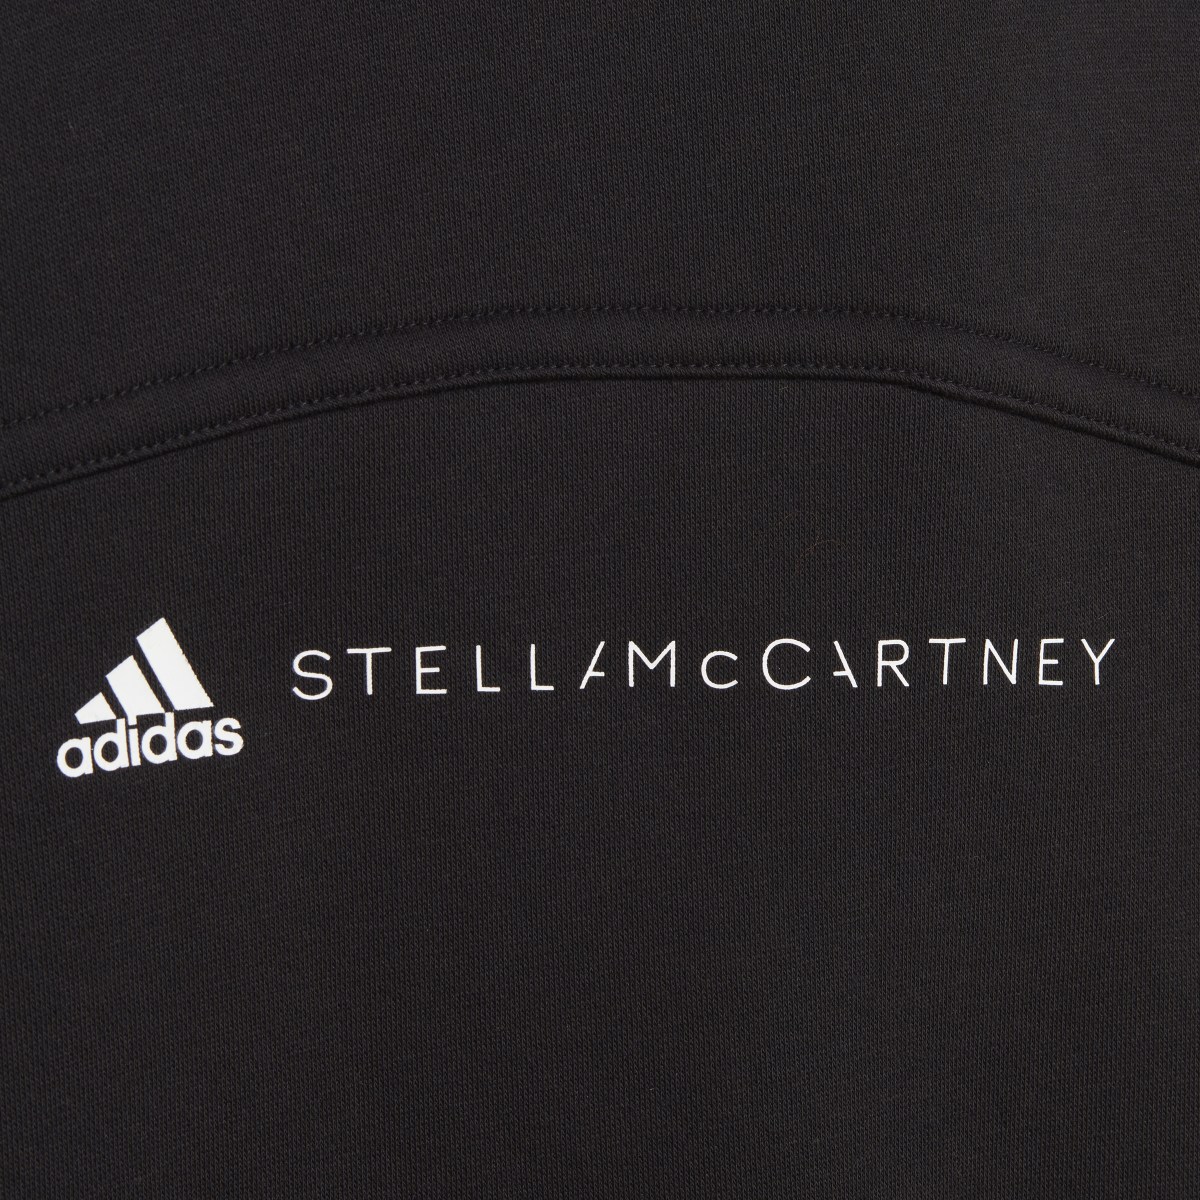 Adidas by Stella McCartney TrueStrength Maternity 3-in-1 Jacket. 4